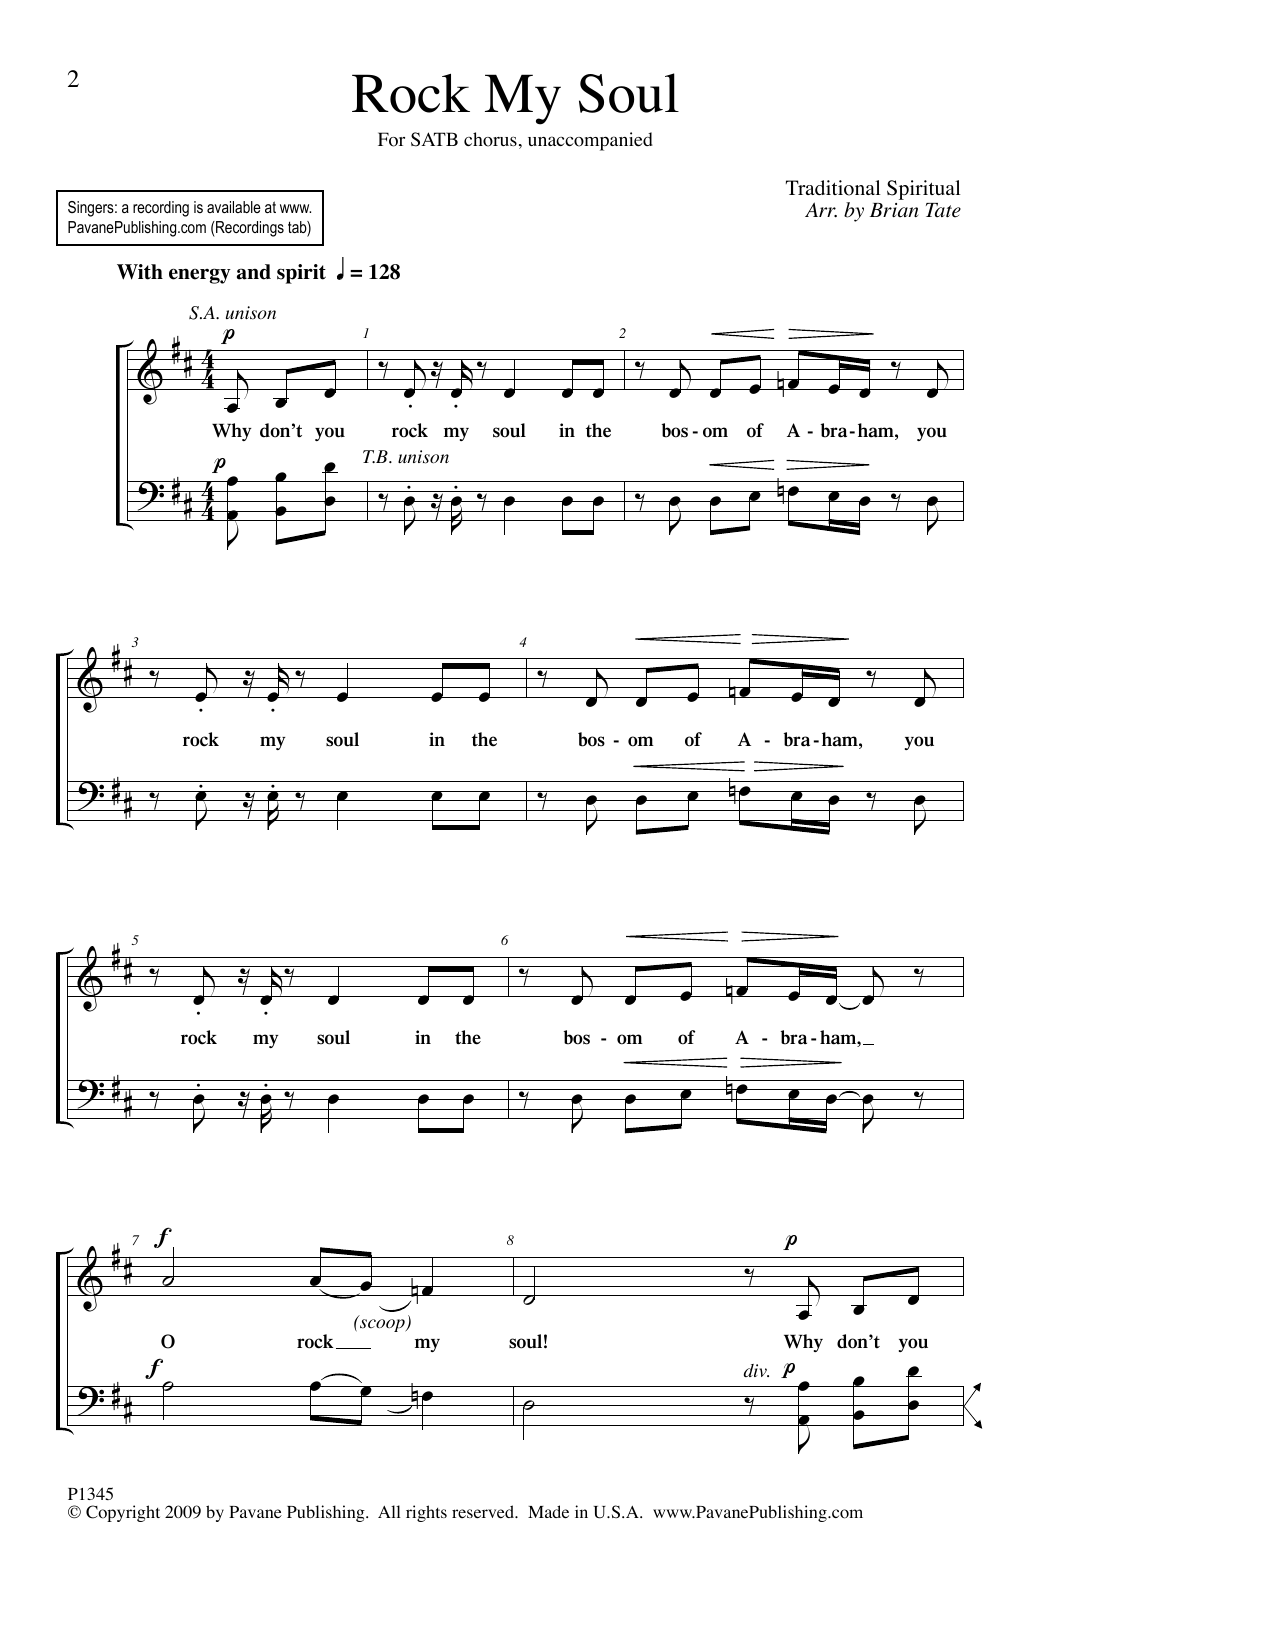 Brian Tate Rock My Soul Sheet Music Notes & Chords for SATB Choir - Download or Print PDF